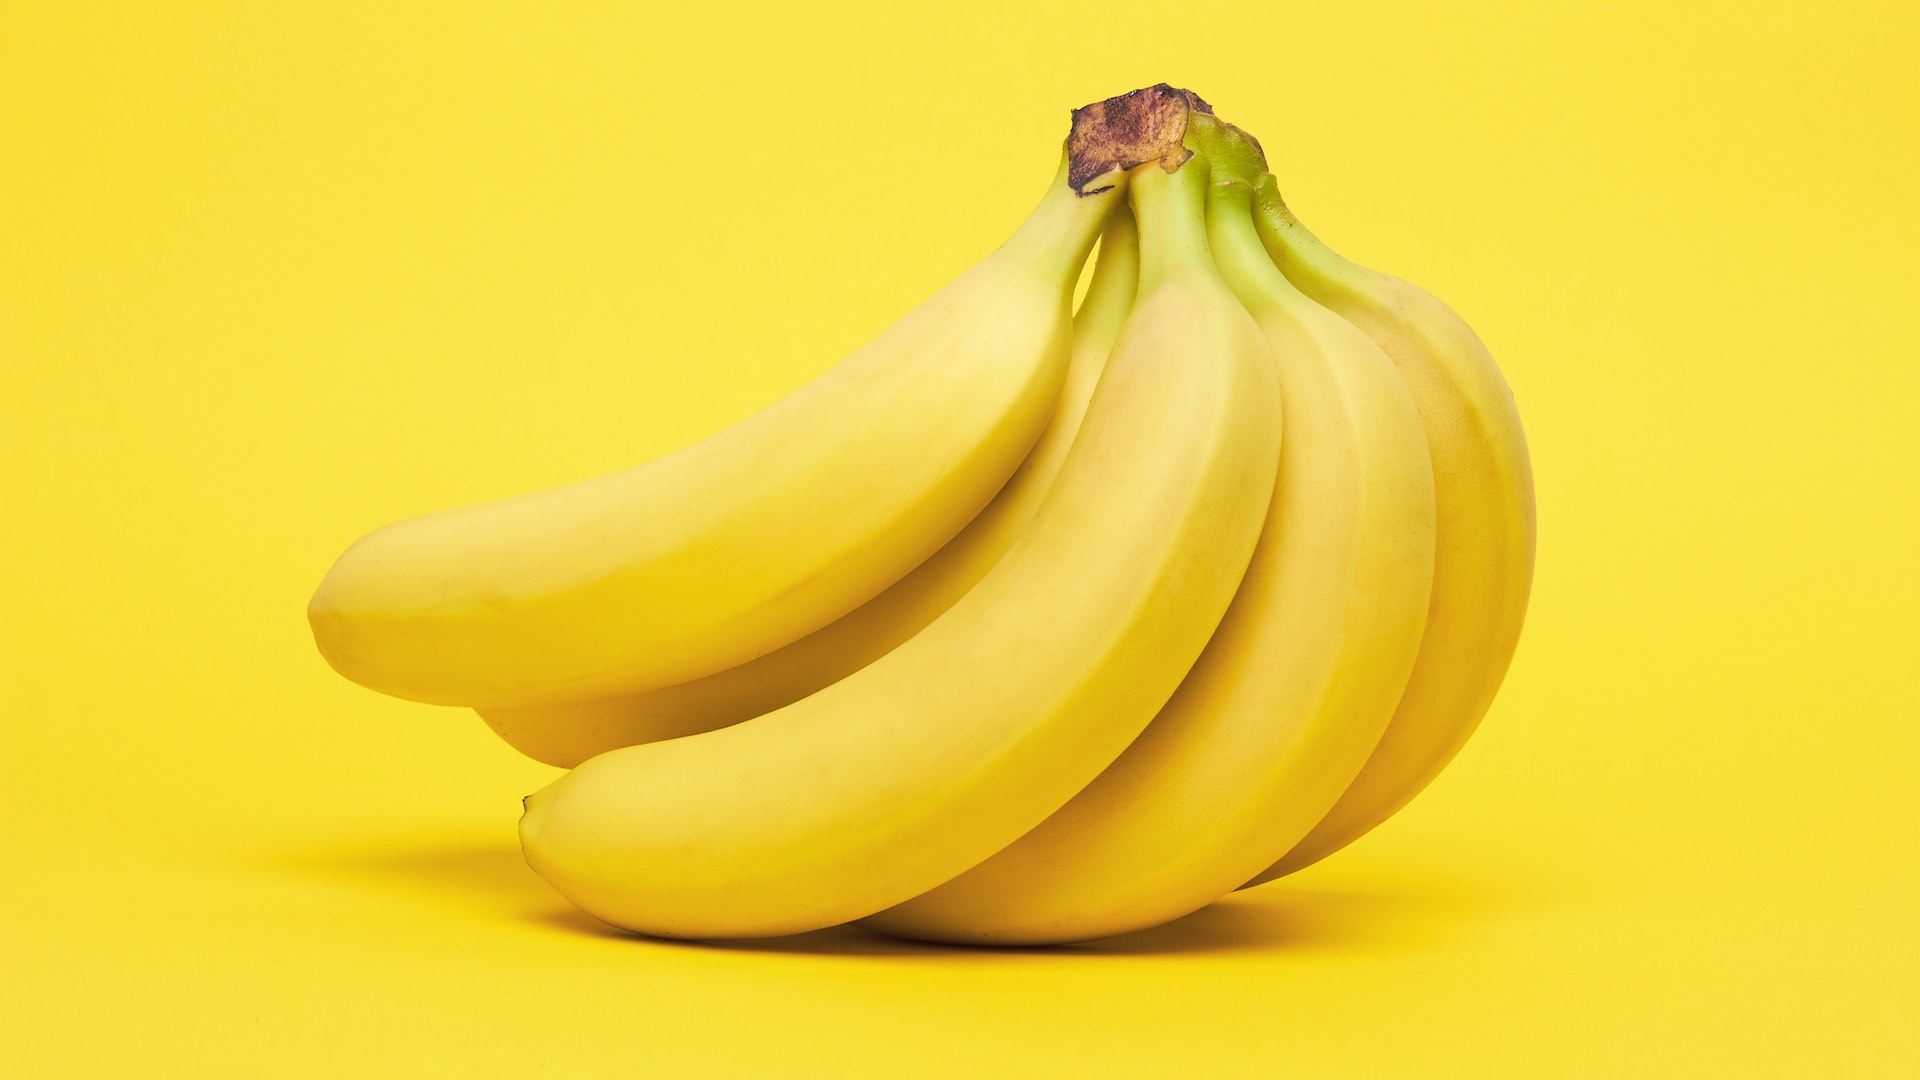 Tasty solution - bananas lower blood pressure